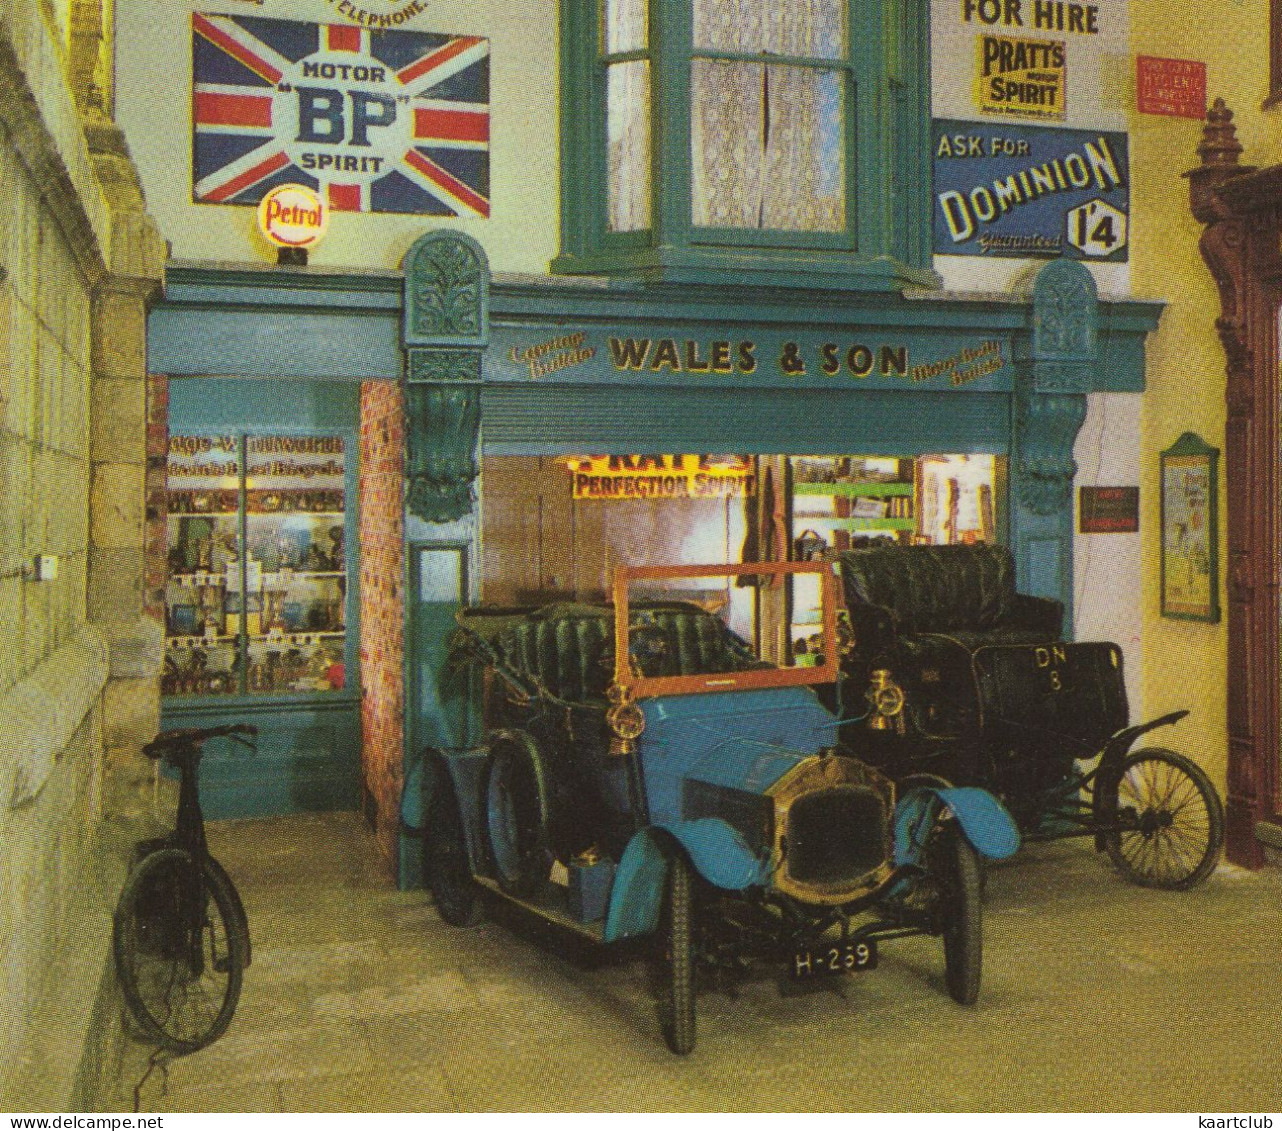 York: 1909 COLIBRI MOTOR CAR, 1899 GROUT STEAM CAR, 2 OLD BICYCLES - 'Motor B.P. Spirit' - Castle Museum Garage - (U.K.) - Voitures De Tourisme